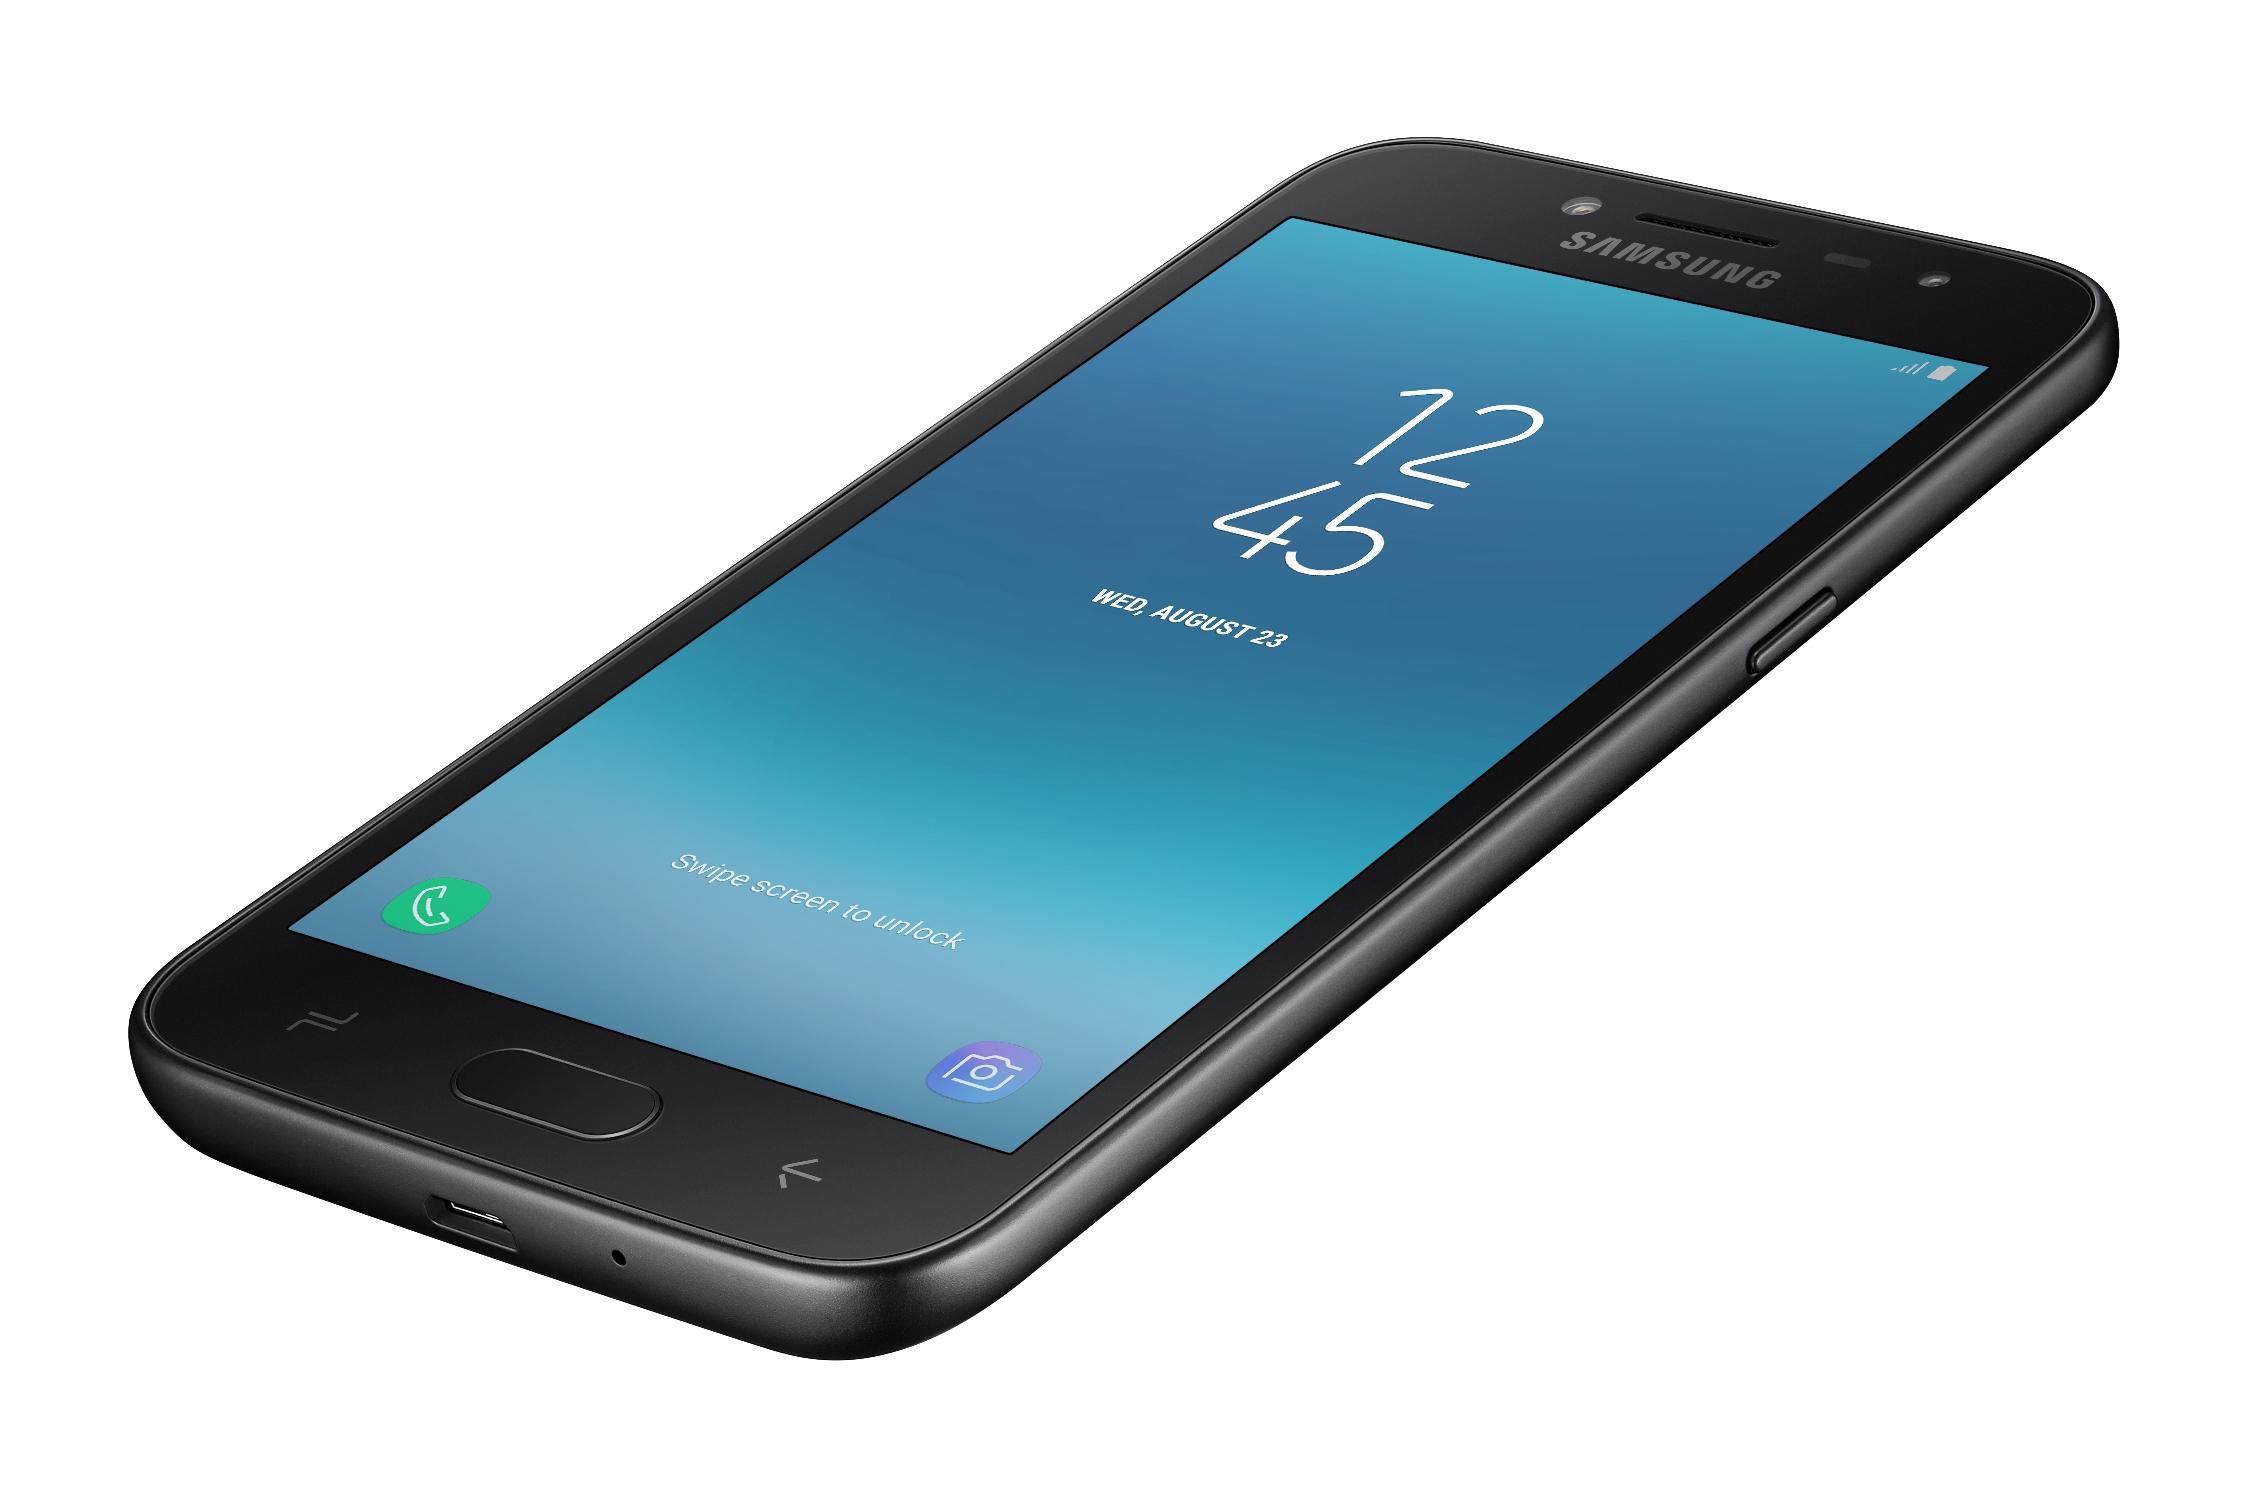 Samsung Hadirkan Galaxy J2 Pro, Smartphone untuk Kamu yang Mudan dan Aktif Bersosial Media